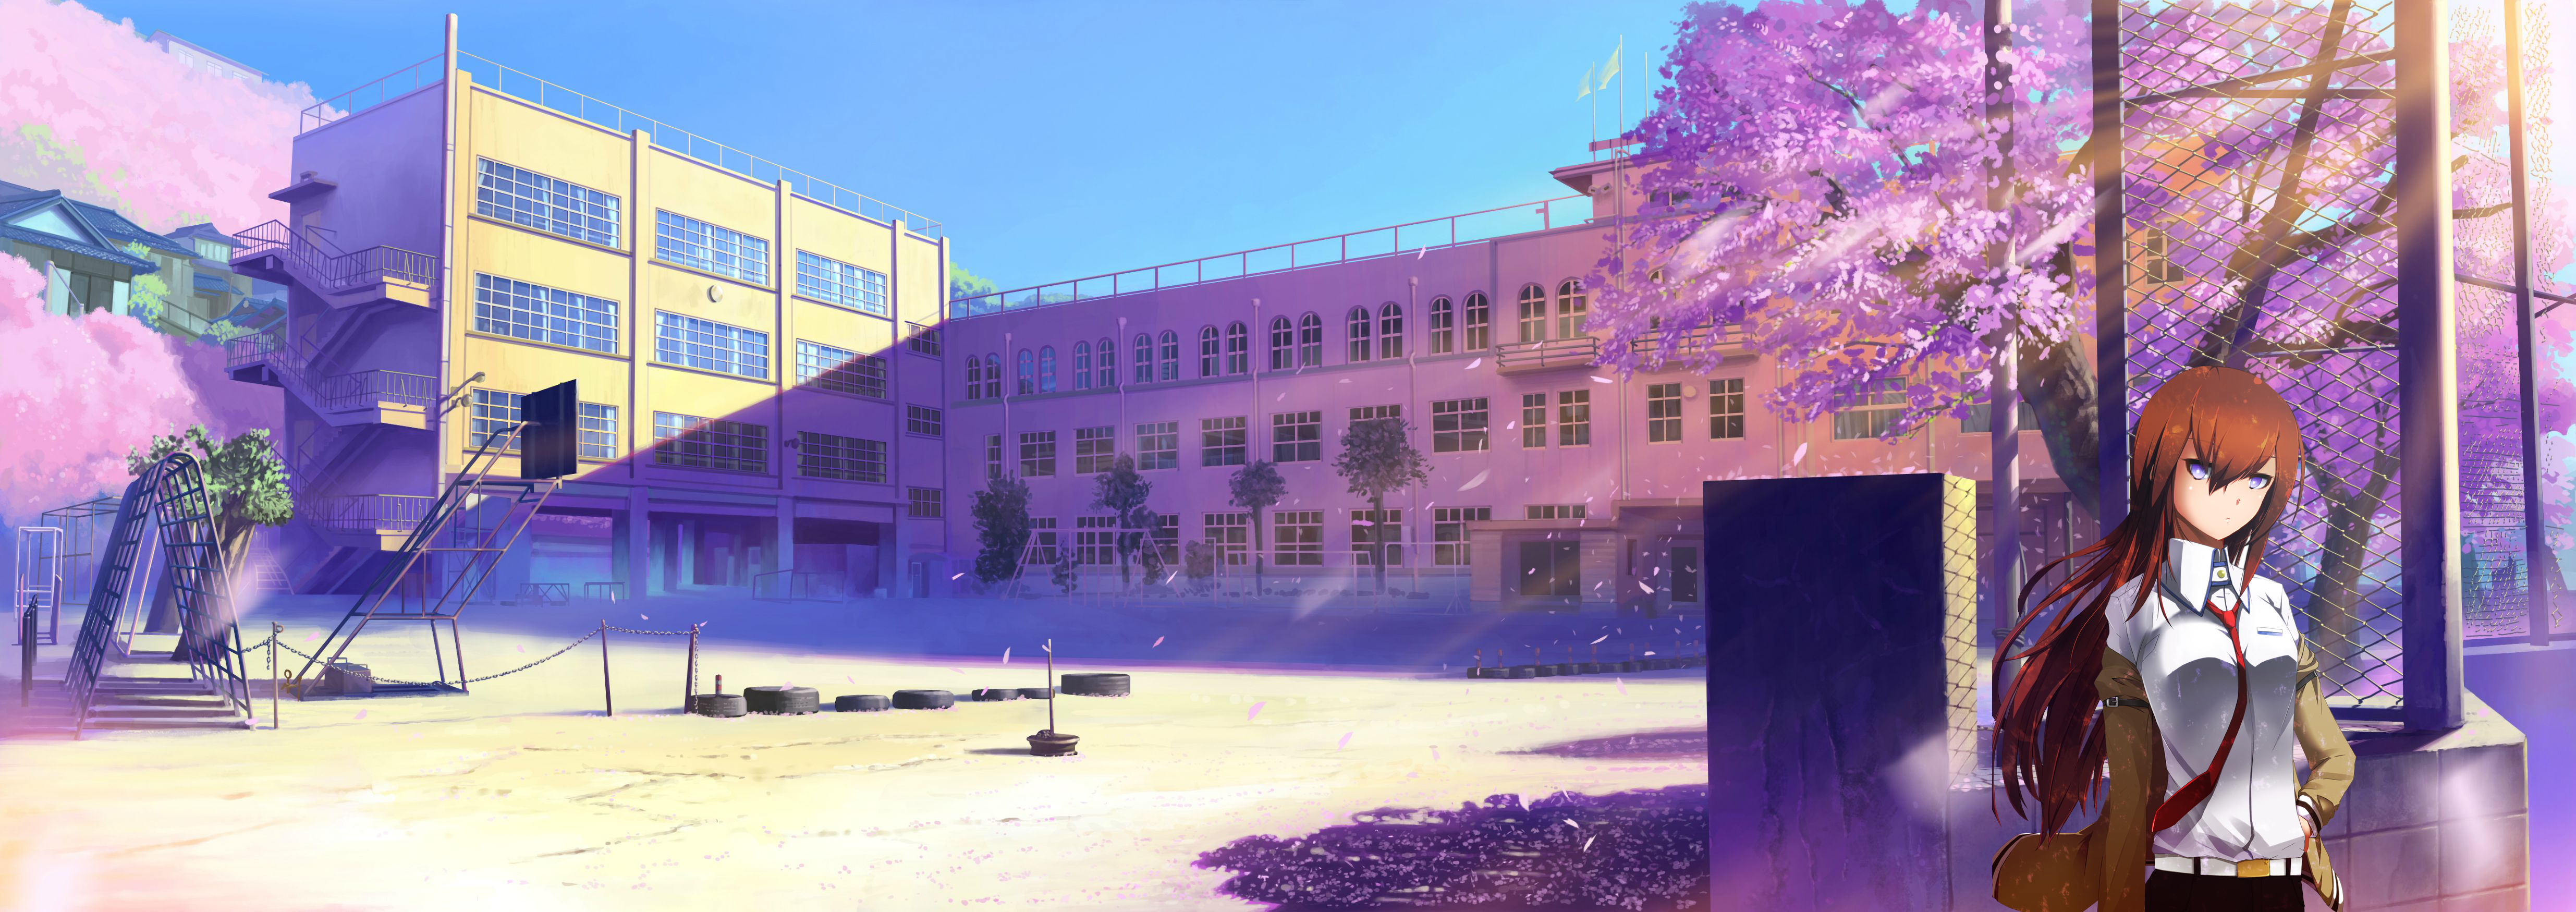 Anime 4941x1749 school cherry blossom clear sky Steins;Gate anime building